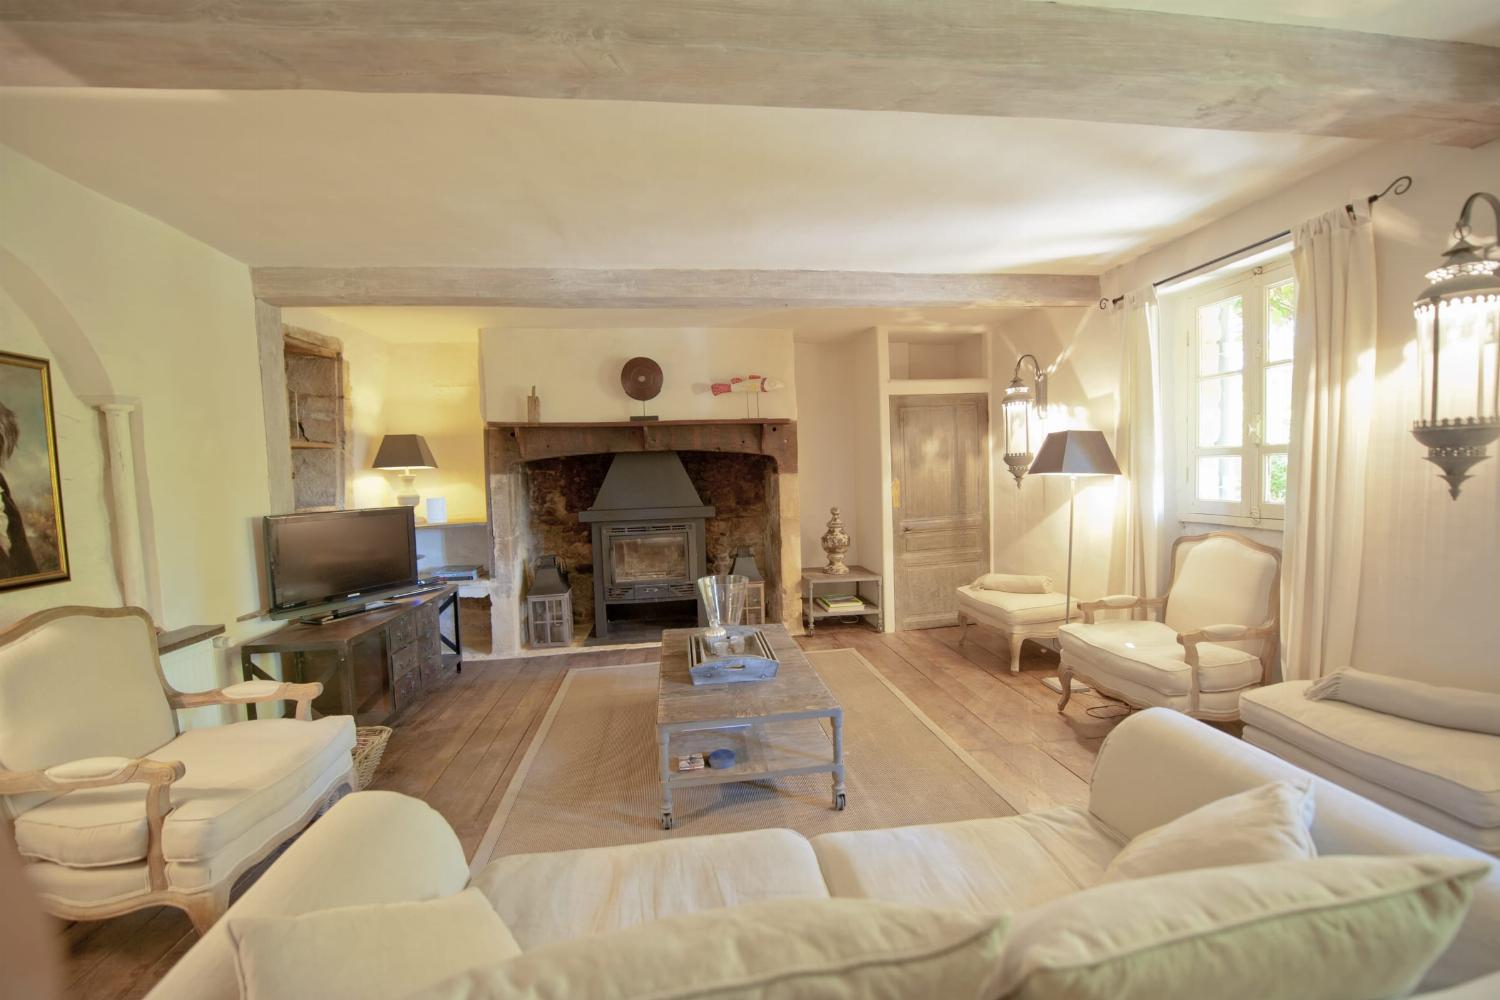 Living room | Rental home in Dordogne